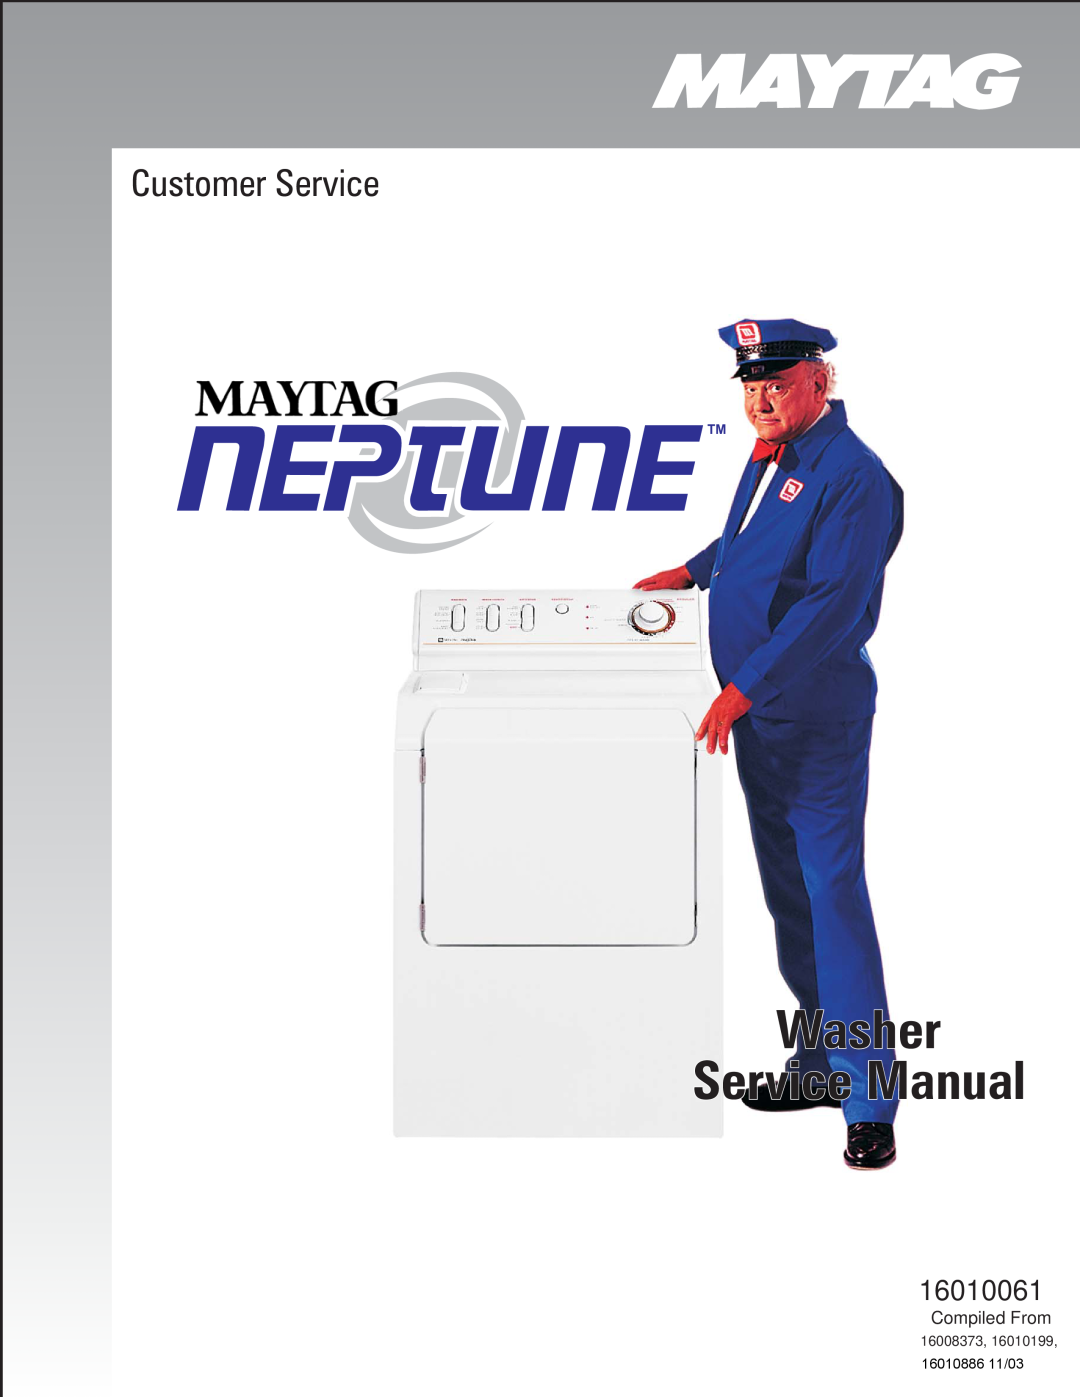 Whirlpool MAH3000 service manual Washer, Service Manual, Customer Service, 16010061, 16010886 11/03, 16008373 